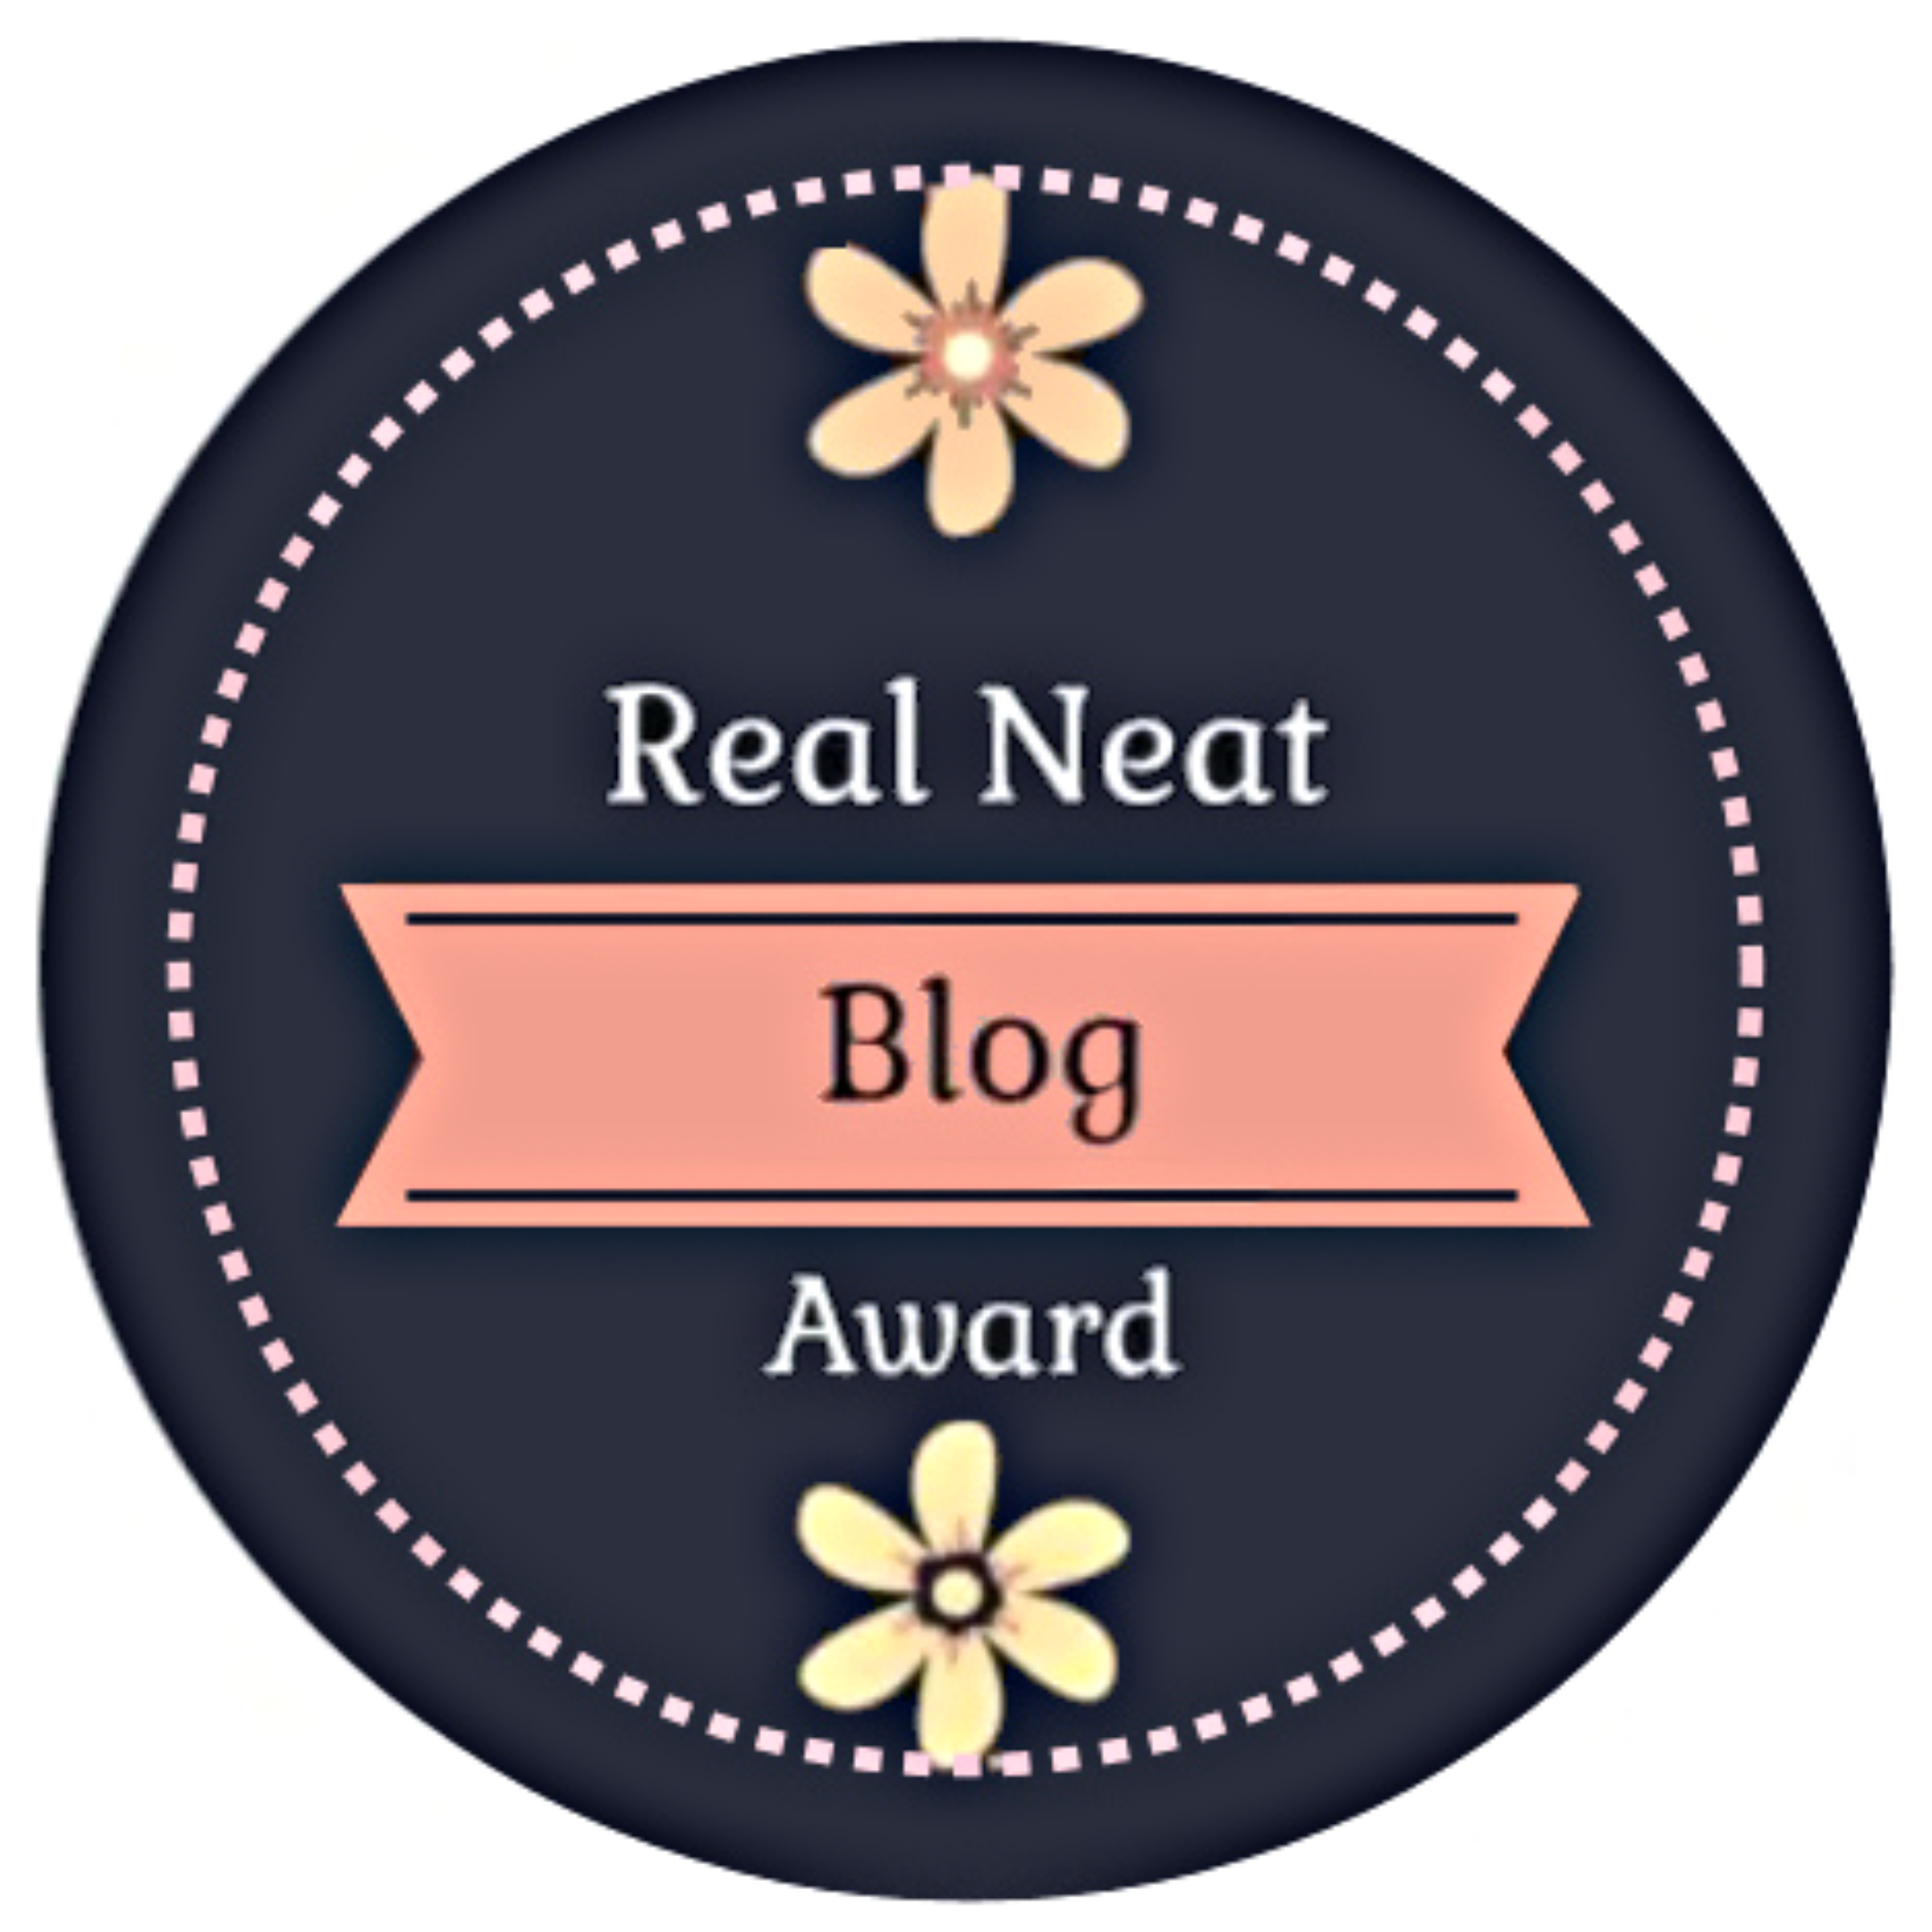 The Real Neat Blog Award